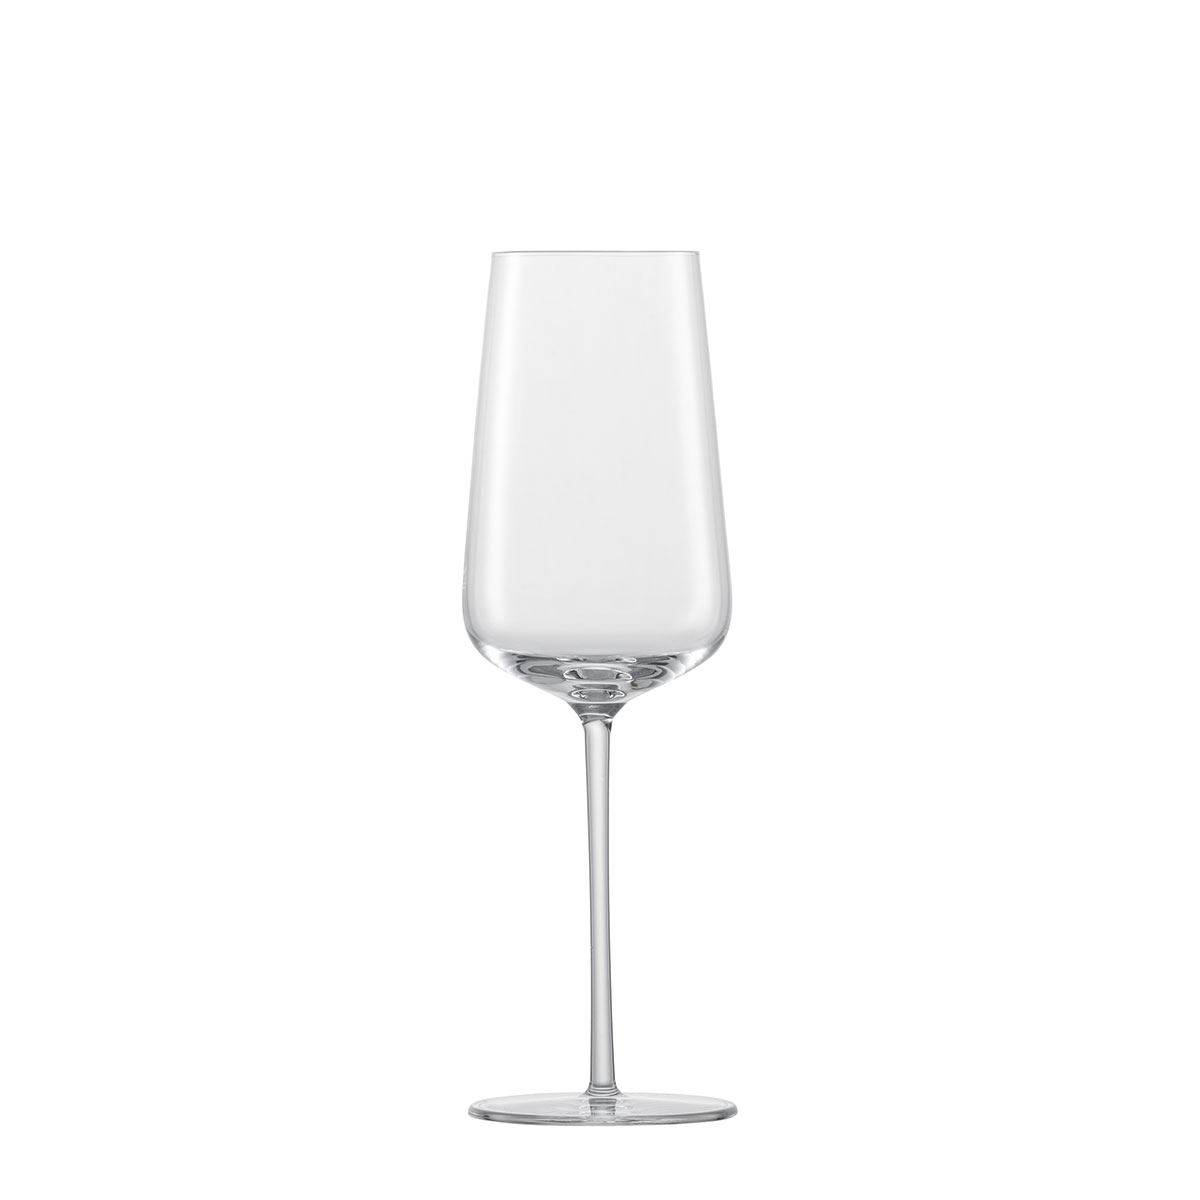 Schott Zwiesel Verbelle/Vervino Champagne Glass, Single